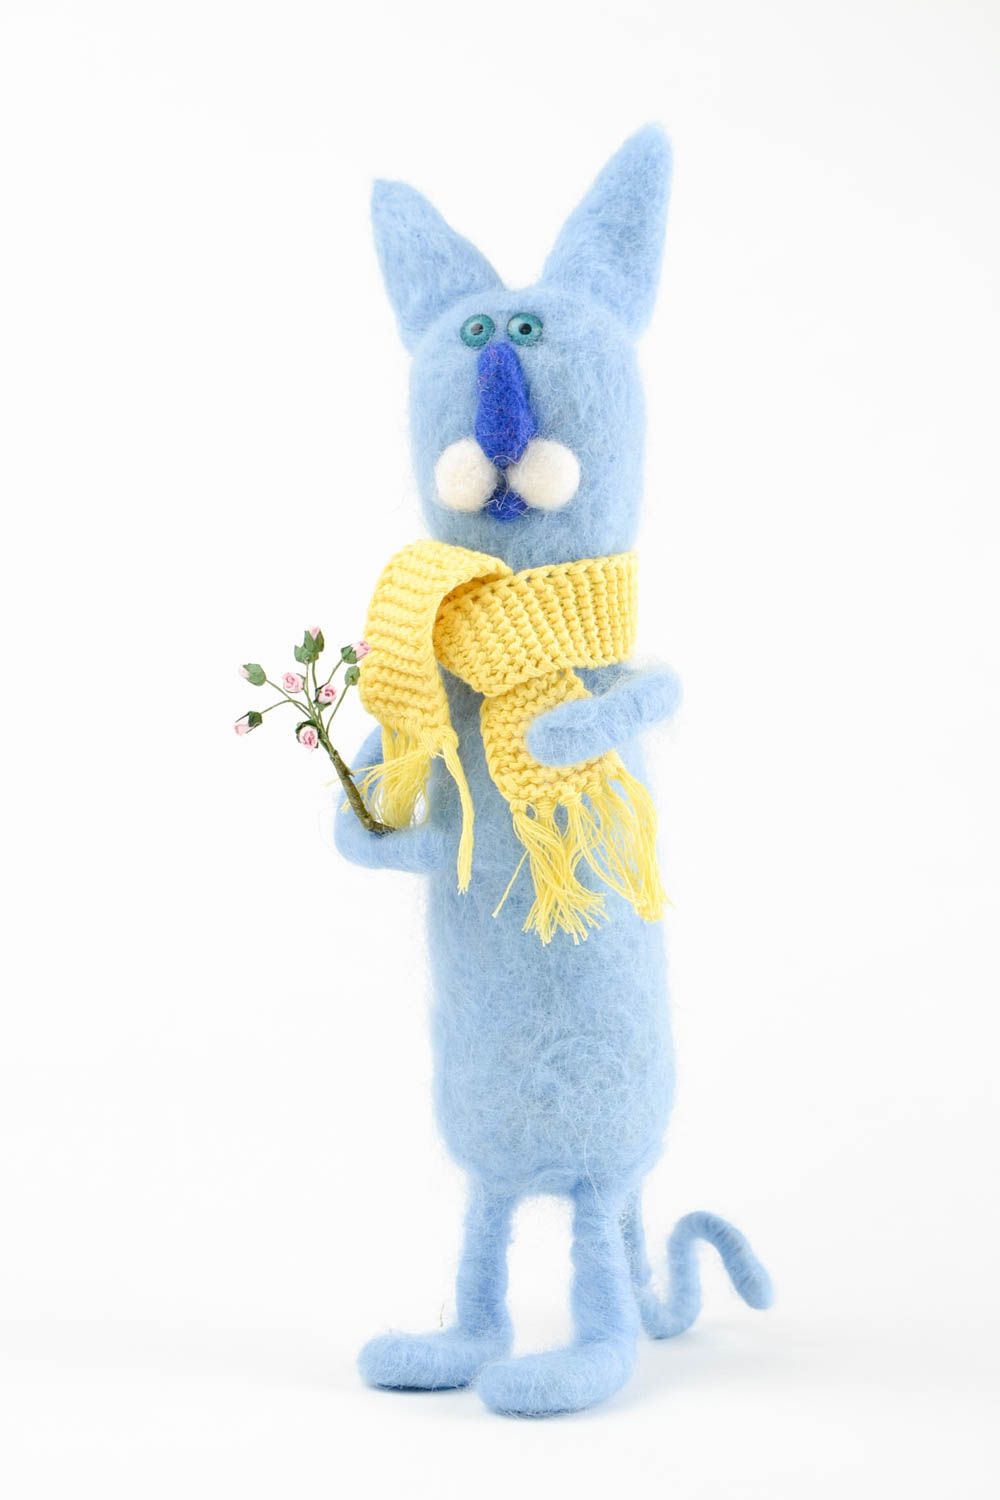 Handmade felt toy soft toy cat figurine stuffed animal home decor gifts for kids photo 3